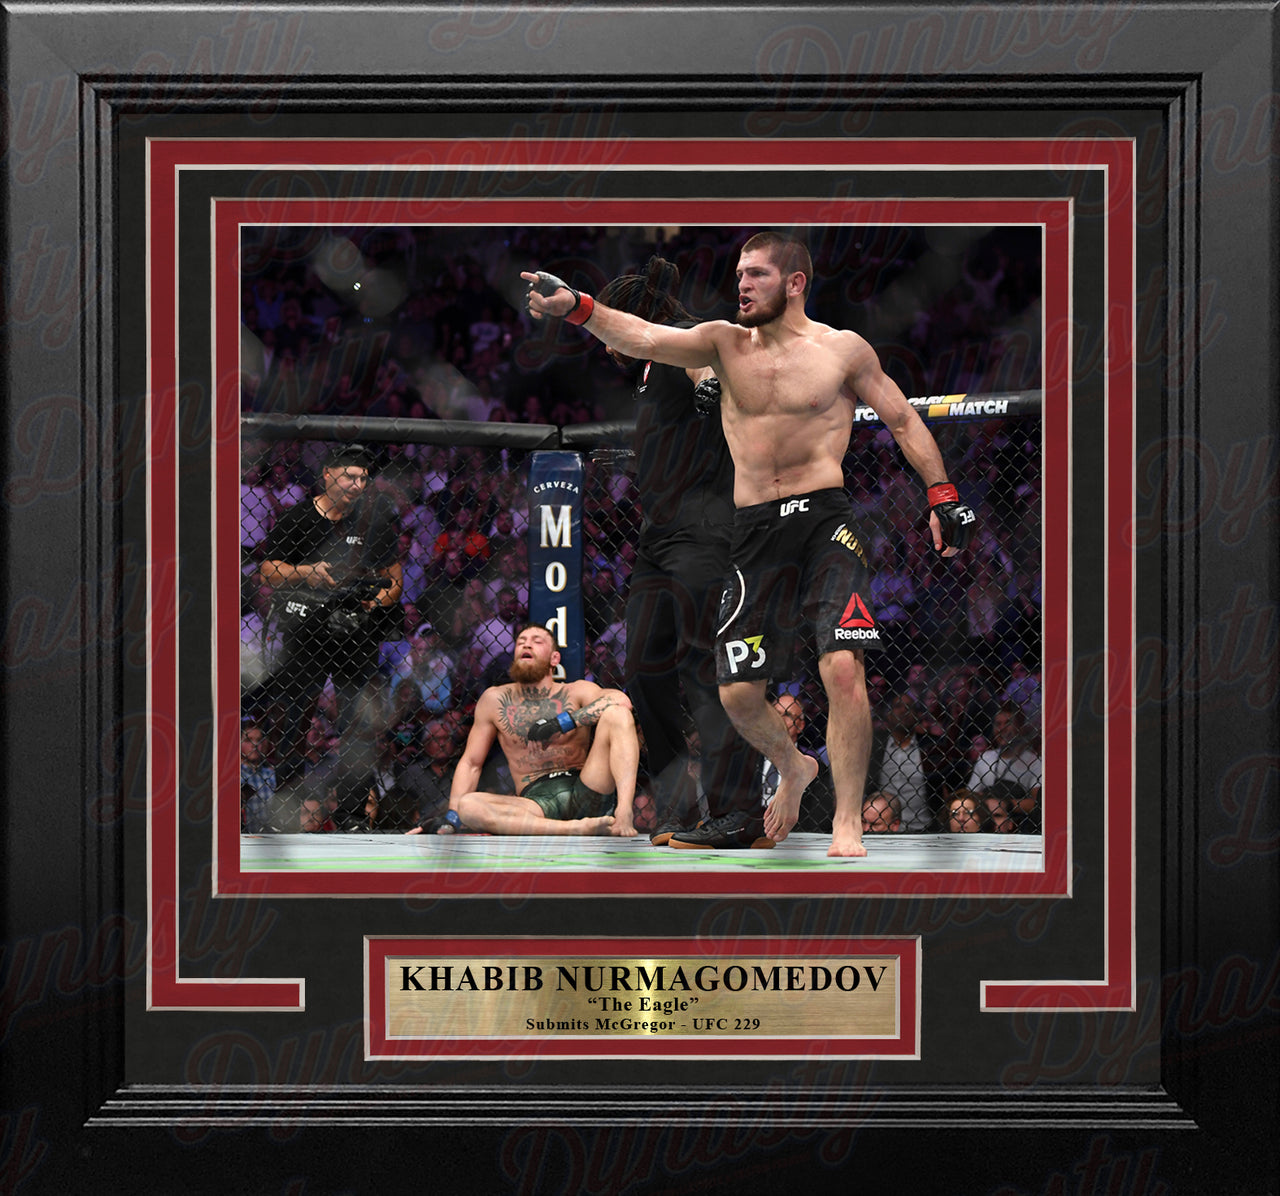 Khabib Nurmagomedov Crushes McGregor 8" x 10" Framed Mixed Martial Arts Photo - Dynasty Sports & Framing 